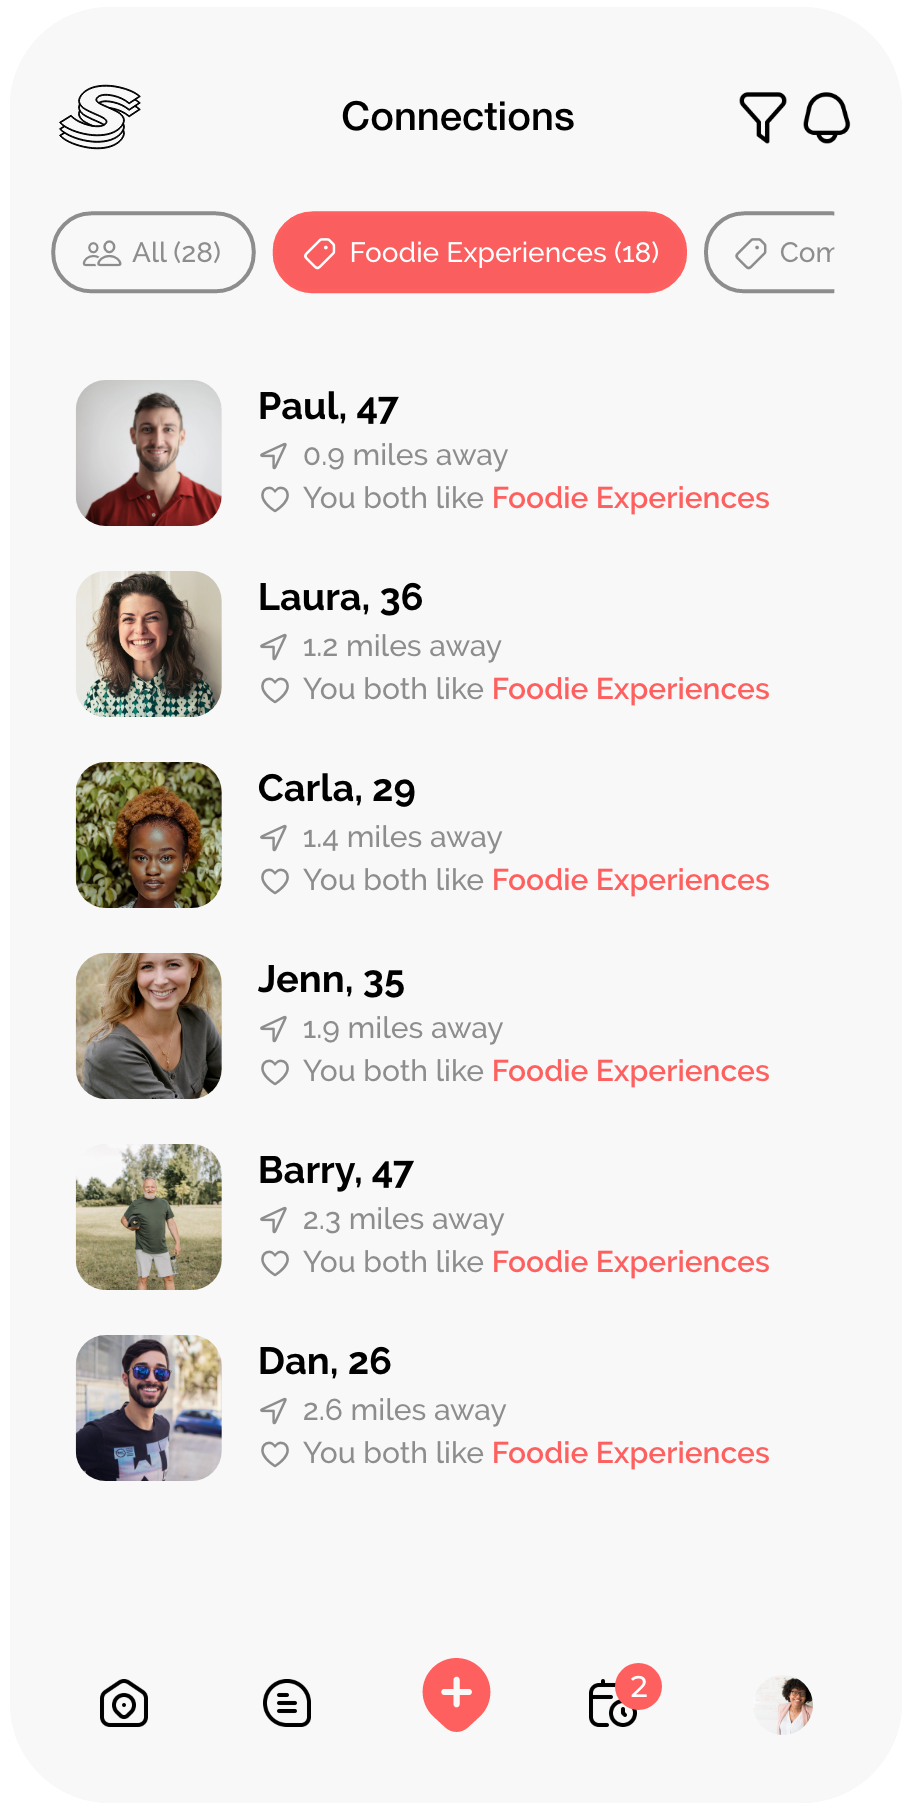 Socially app - Connections screen